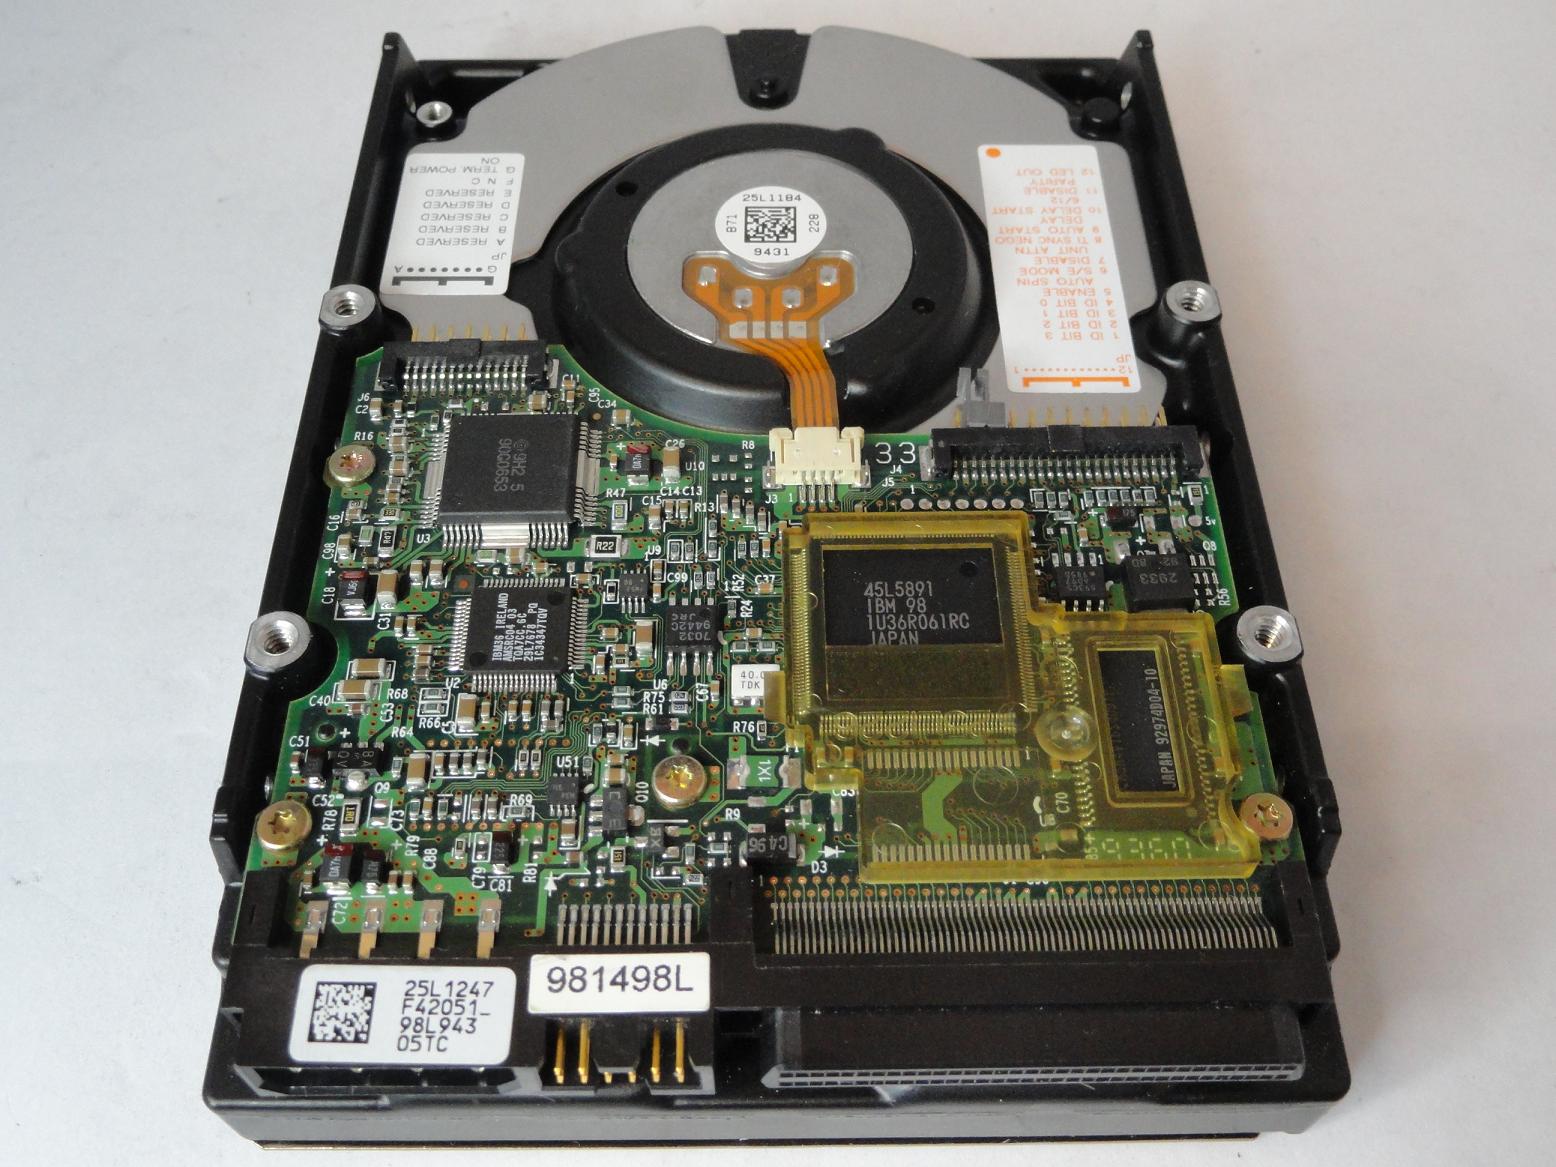 MC6209_25L1950_IBM 18GB SCSI 68 Pin 7200rpm 3.5in HDD - Image2